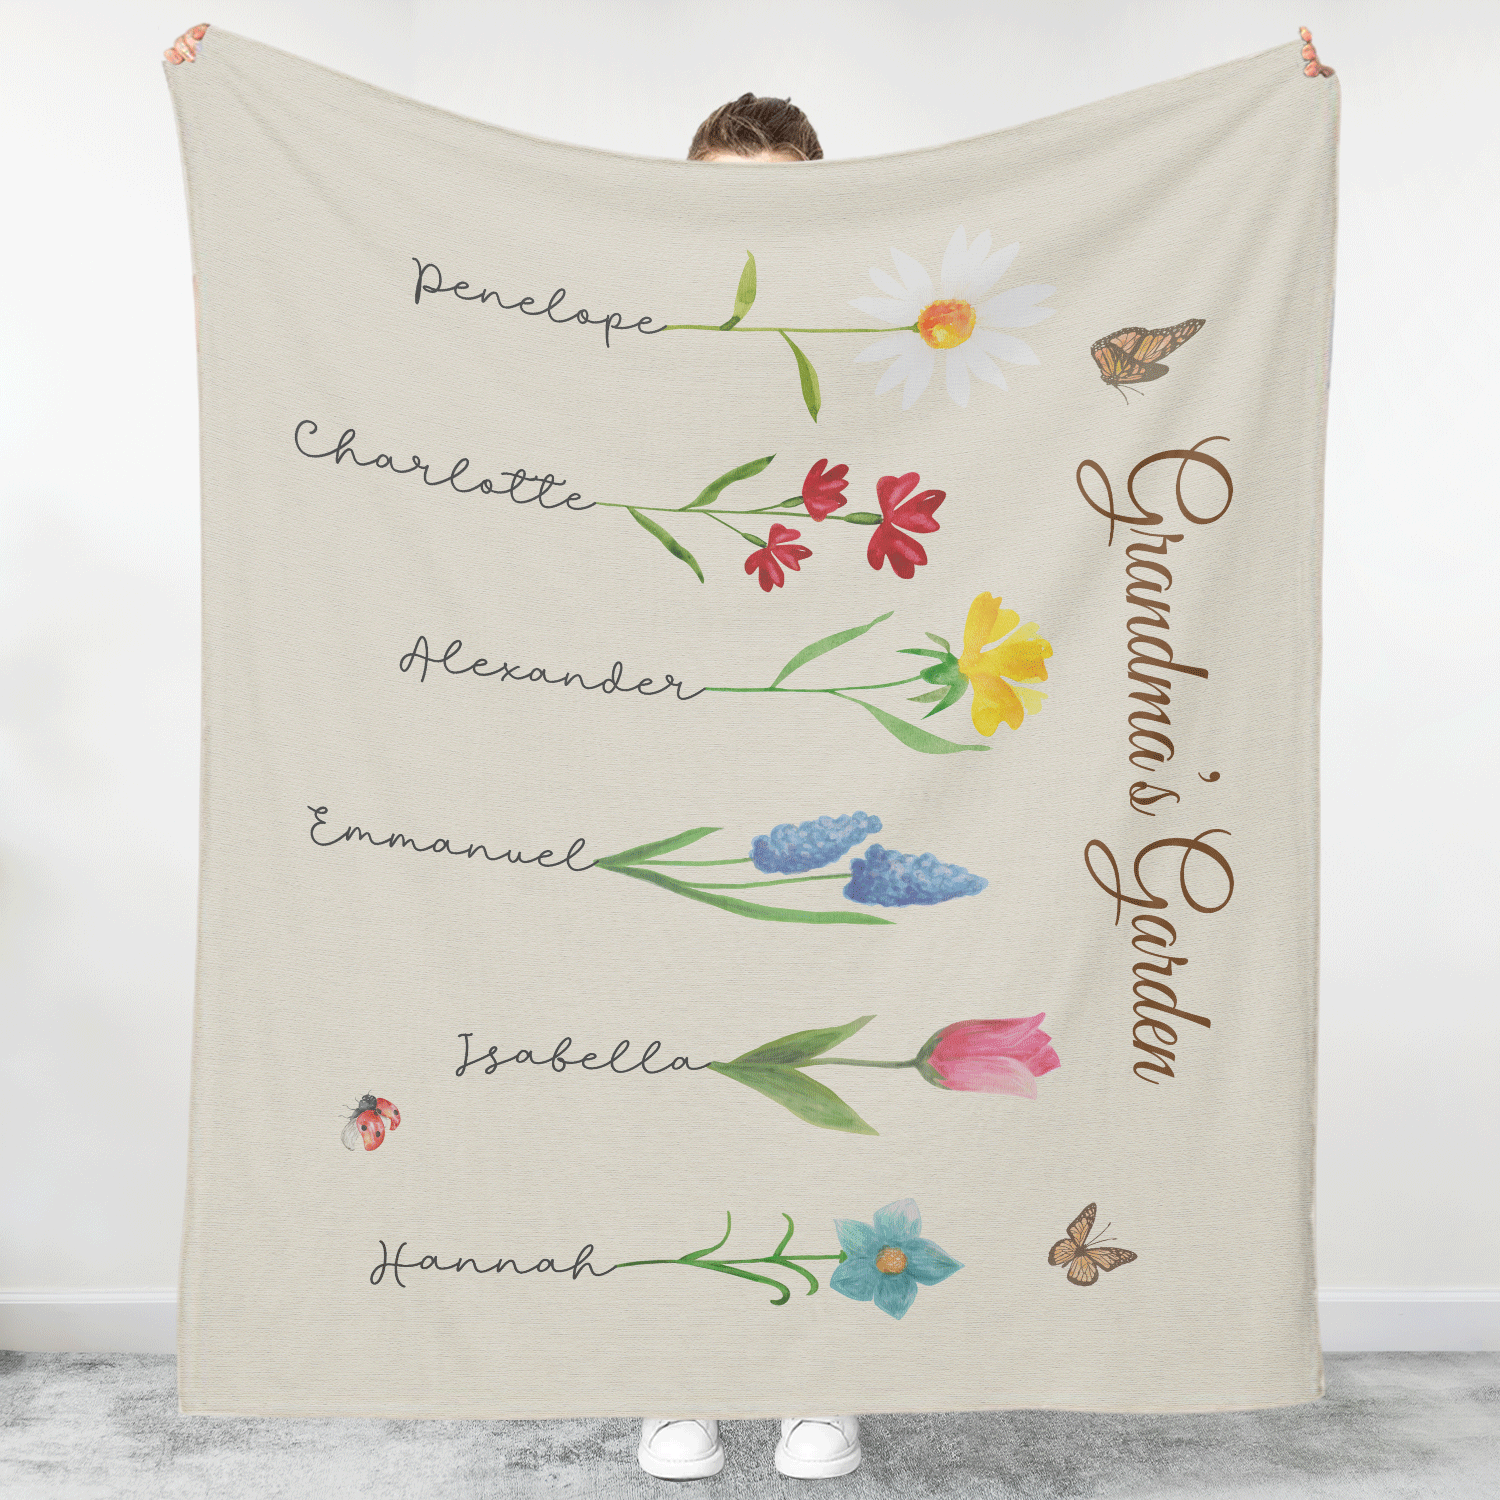 Grandma’s Garden Custom Kids Name Blanket